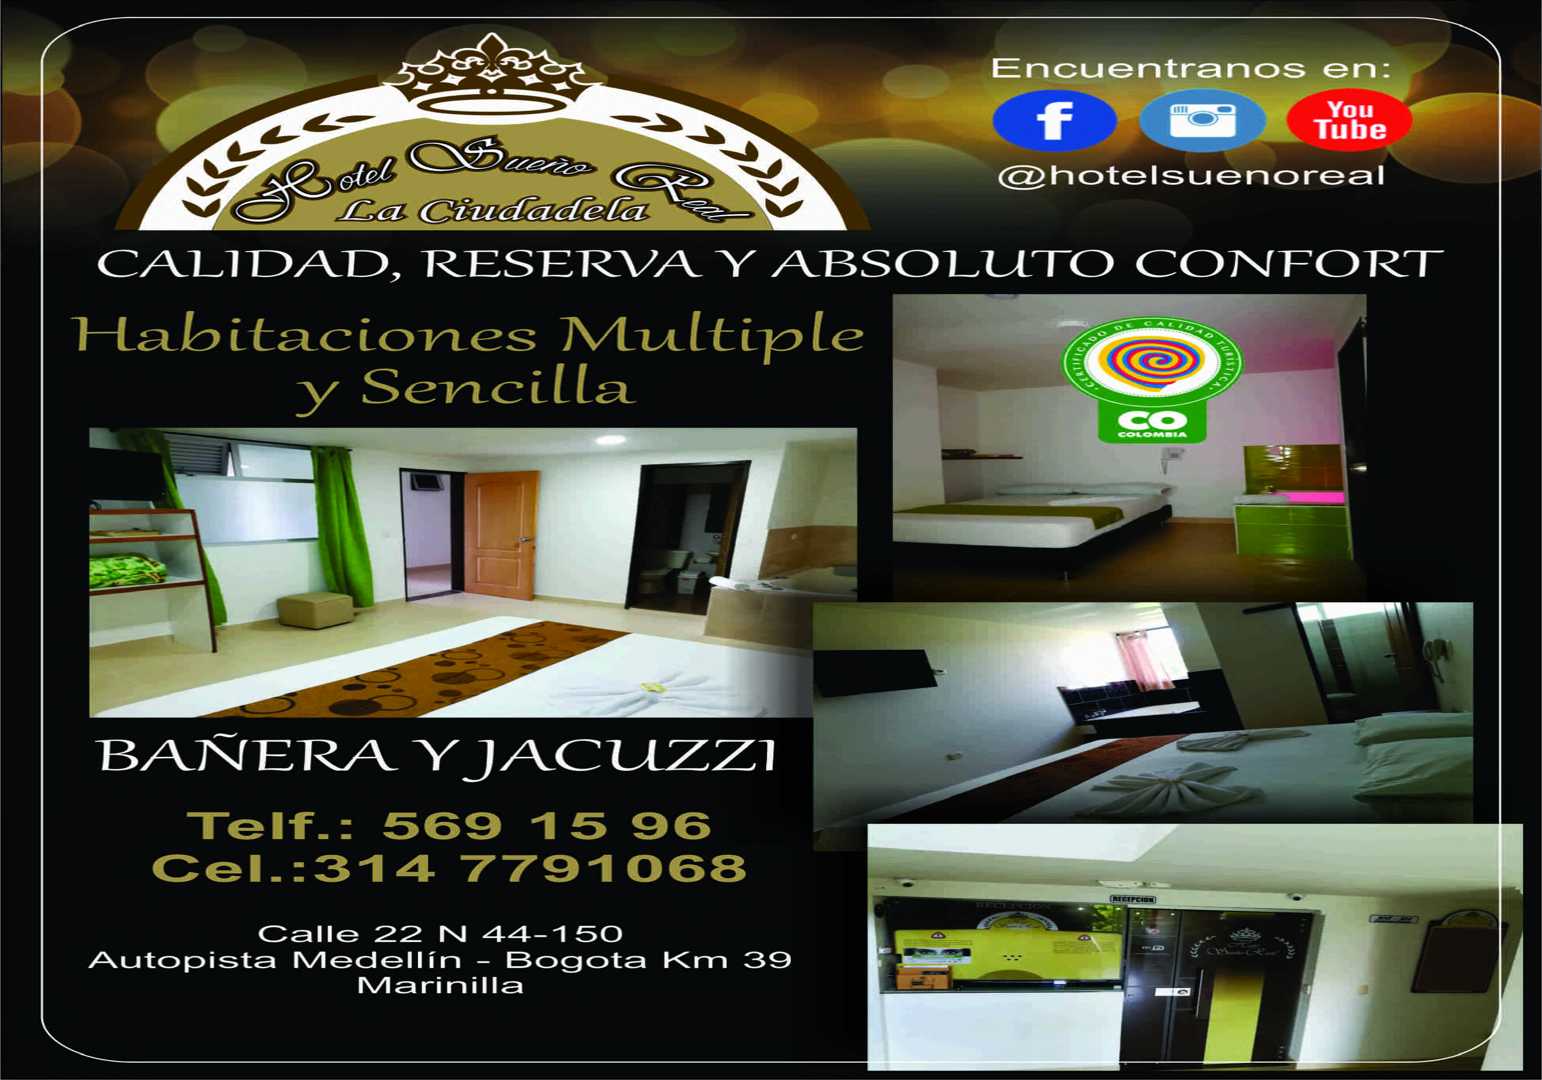 Hotel Sueño Real - Marinilla Antioquia